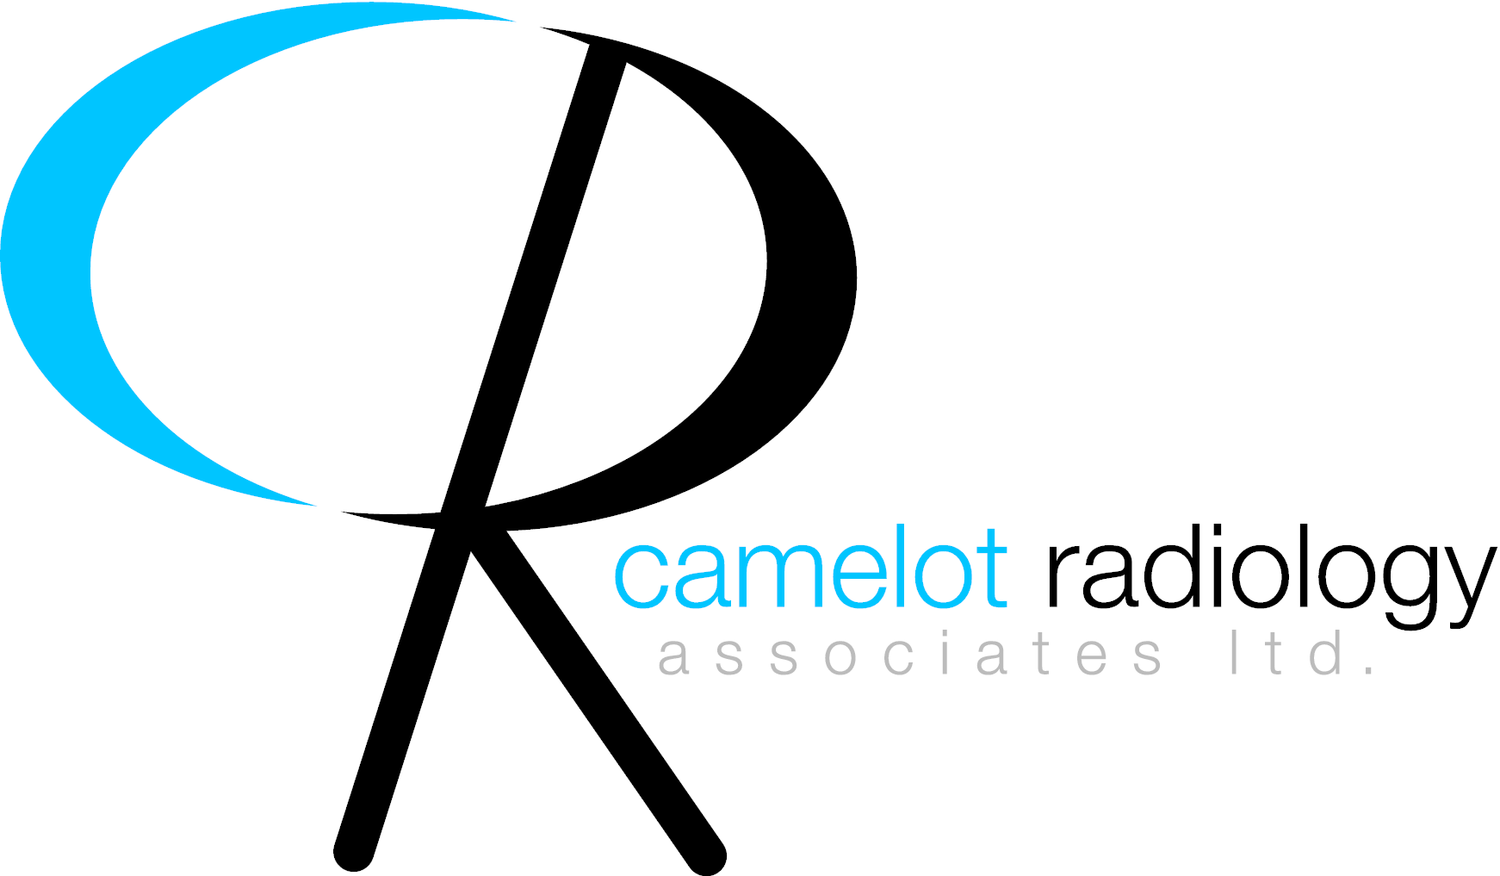 Camelot Radiology